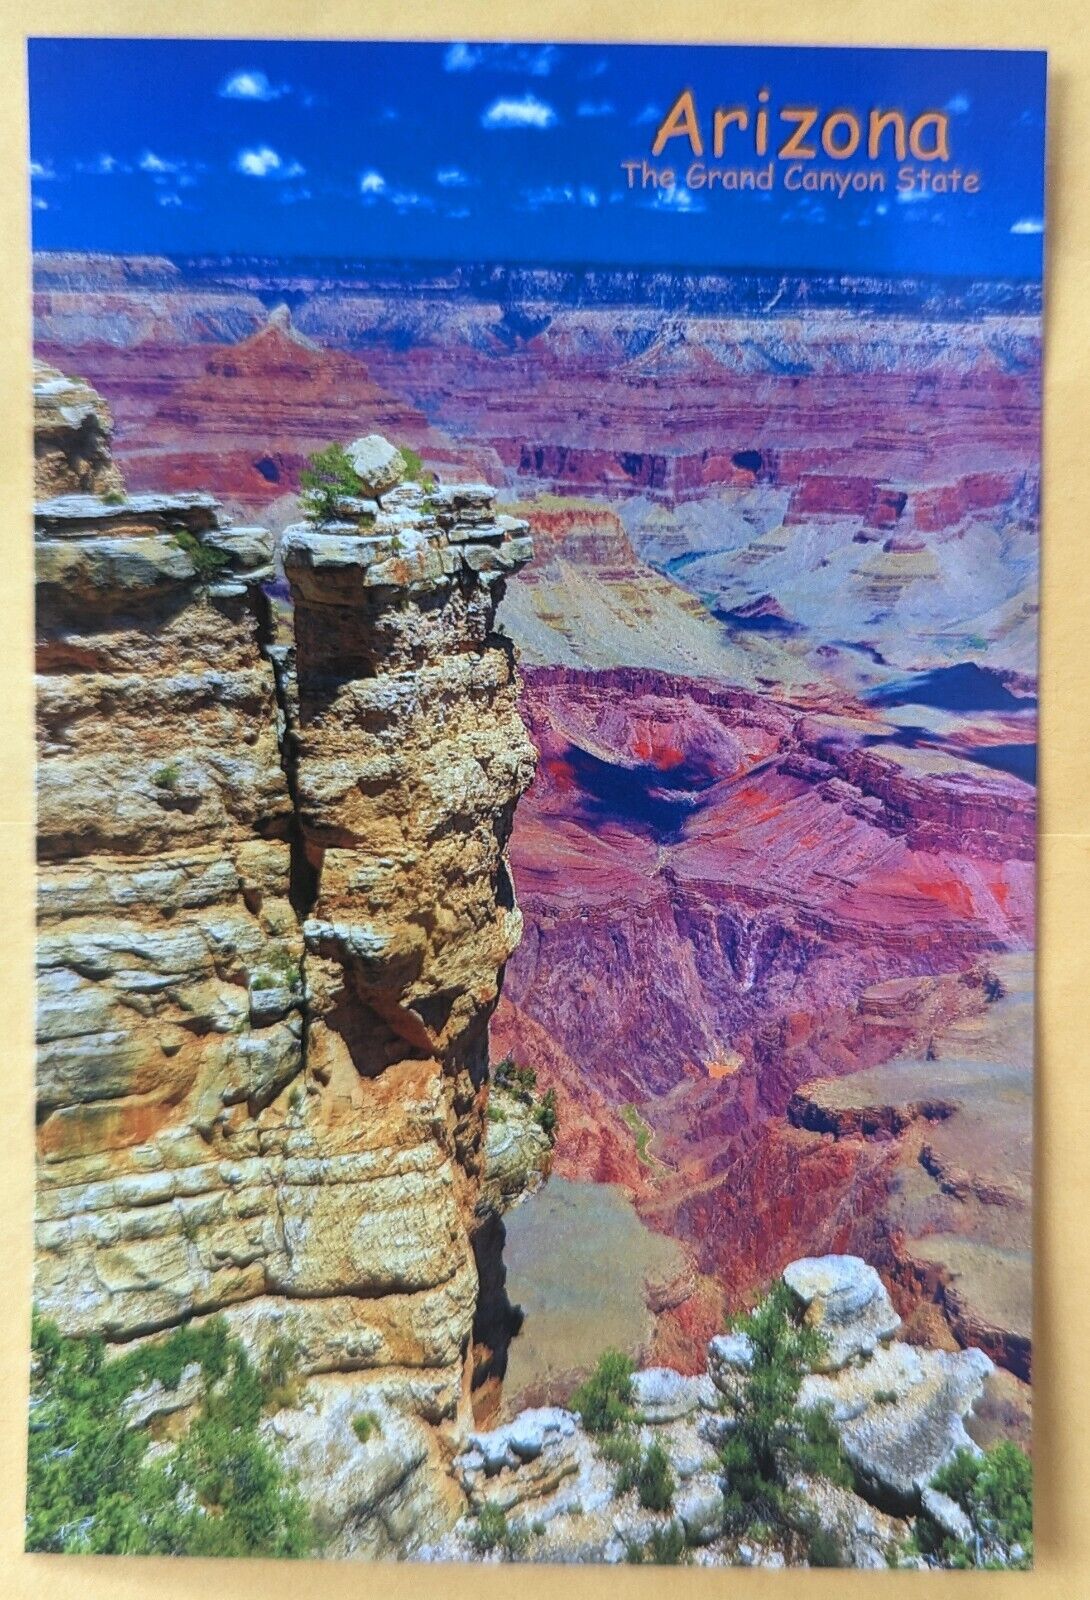  Postcard AZ: Arizona - The Grand Canyon State 